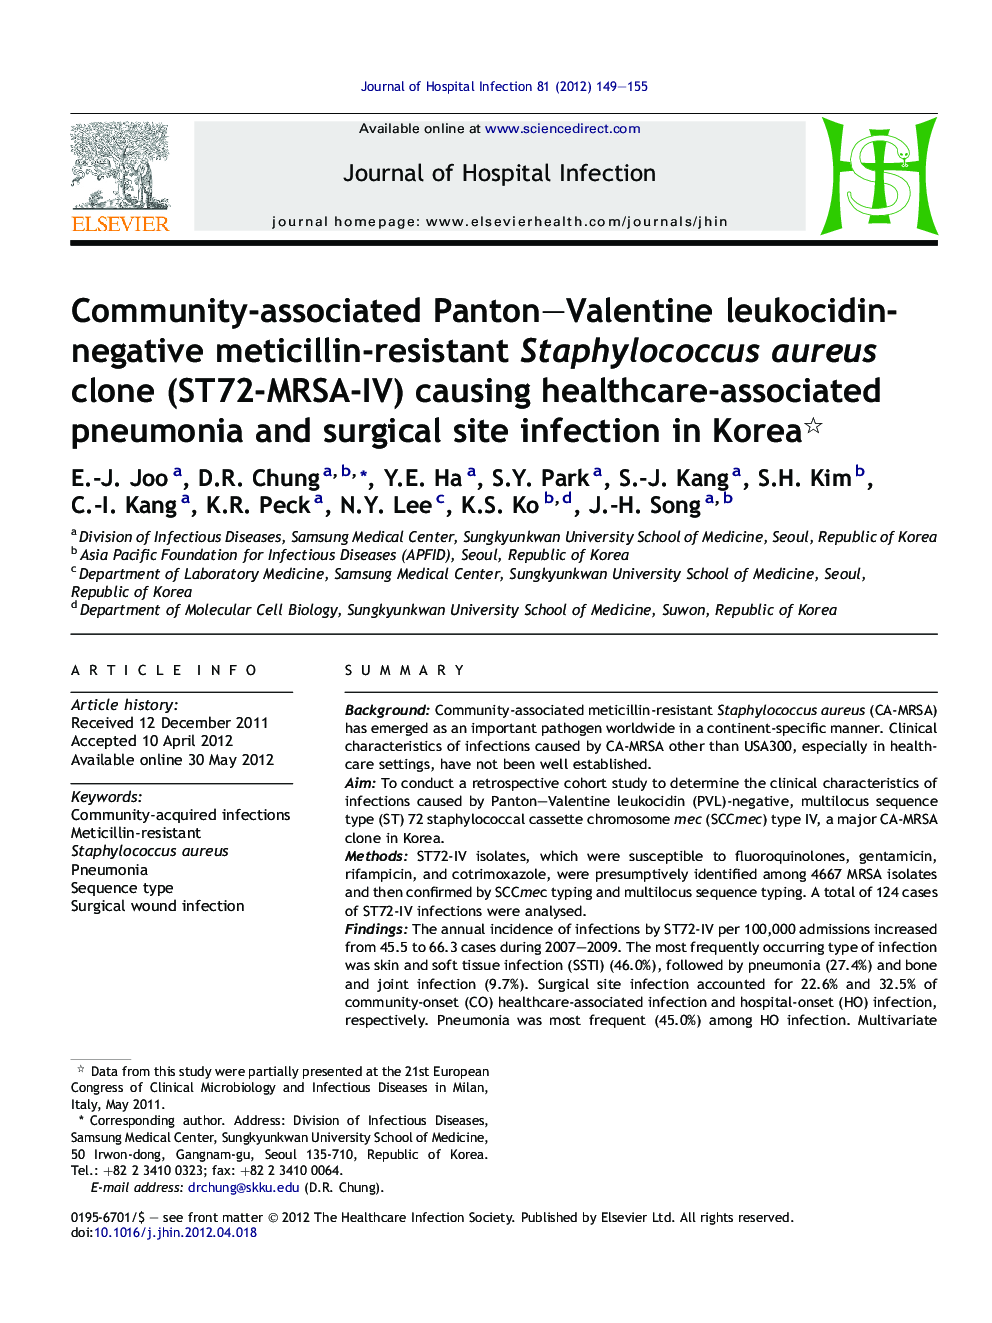 Community-associated Panton–Valentine leukocidin-negative meticillin-resistant Staphylococcus aureus clone (ST72-MRSA-IV) causing healthcare-associated pneumonia and surgical site infection in Korea 